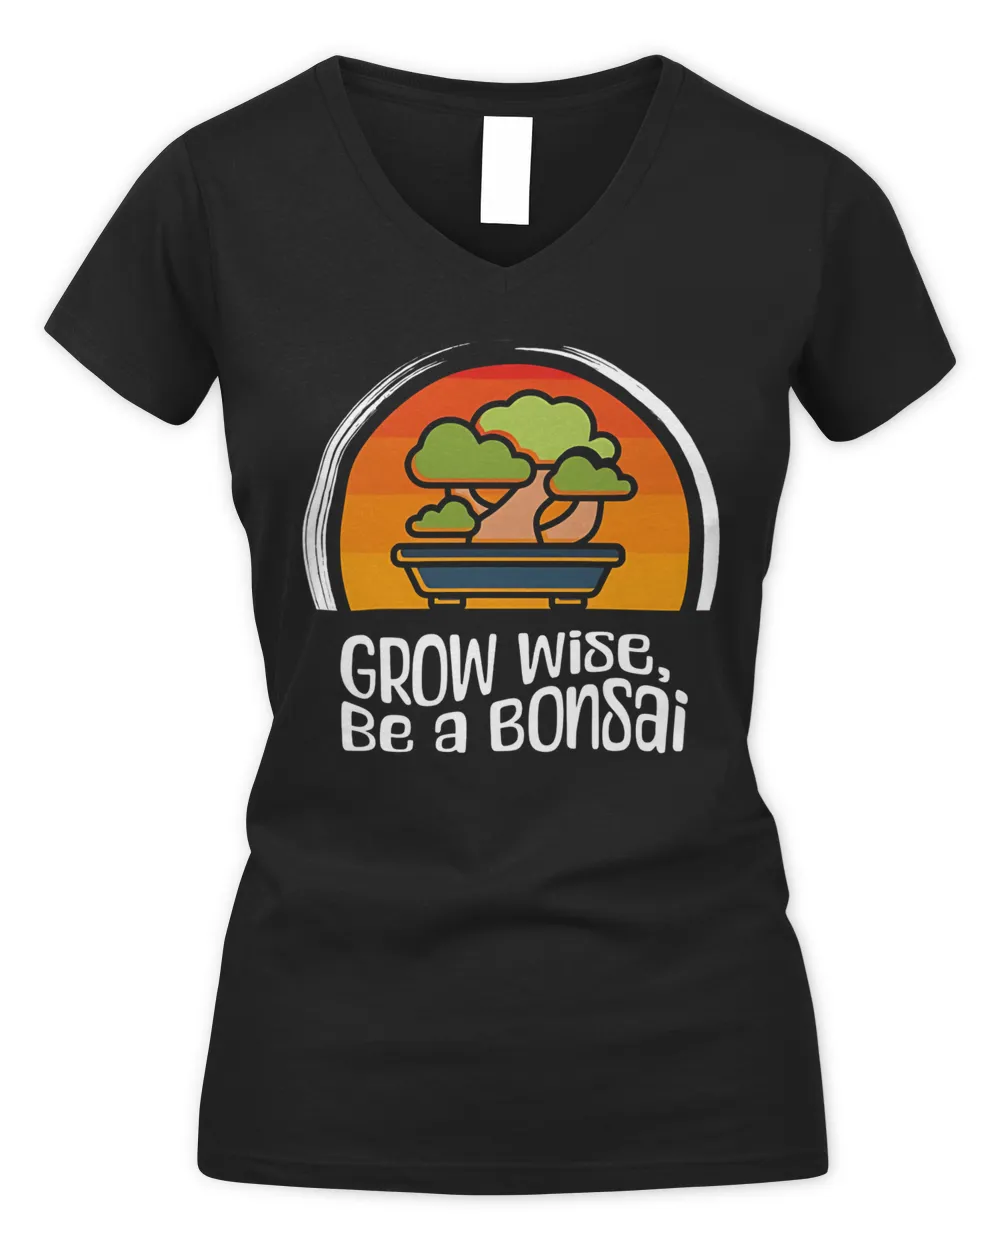 Grow wise be bonsai